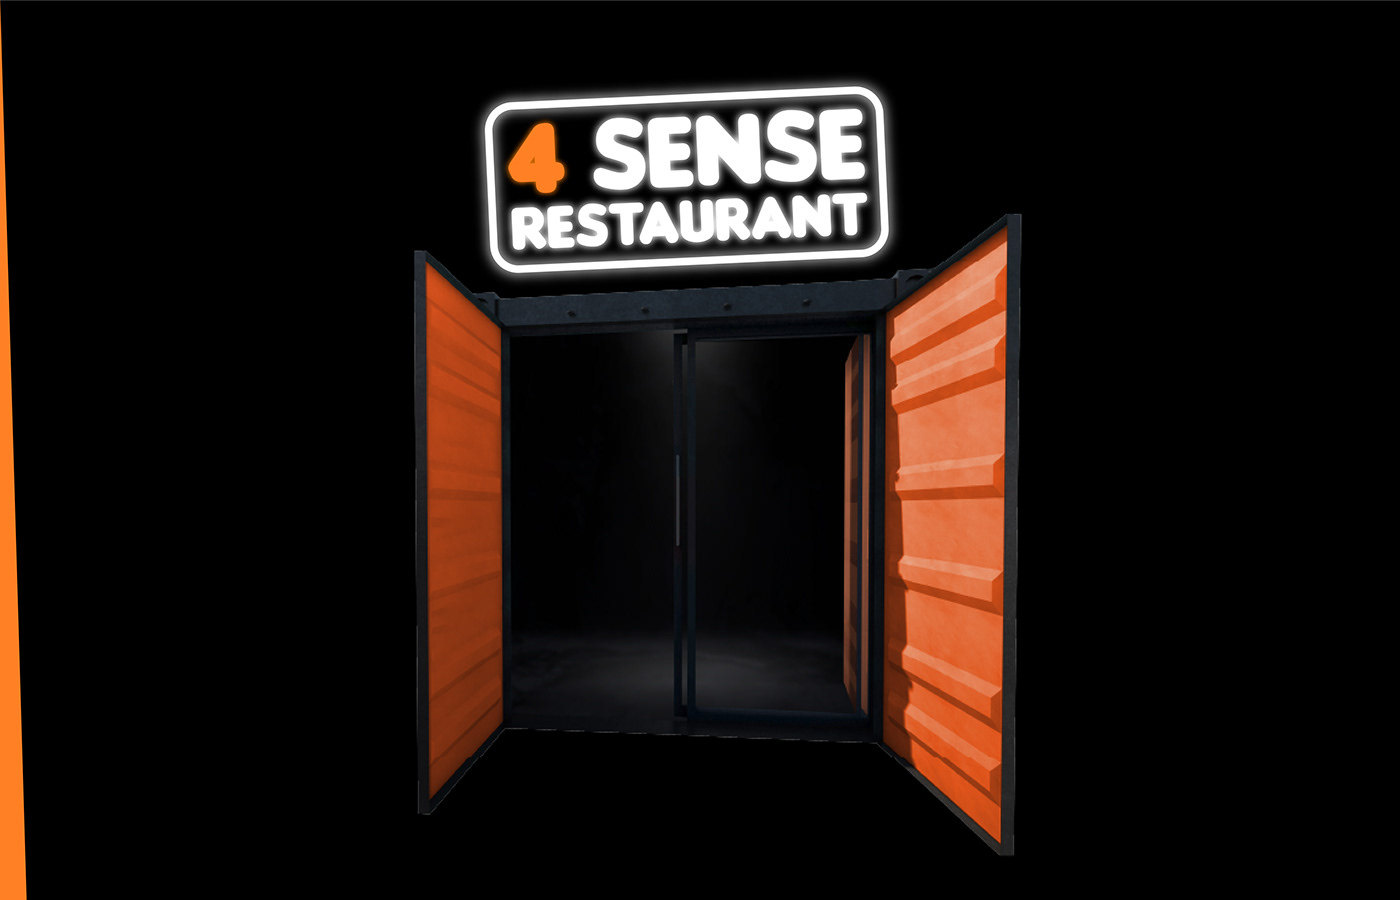 4 Sense Restaurant - Burger King